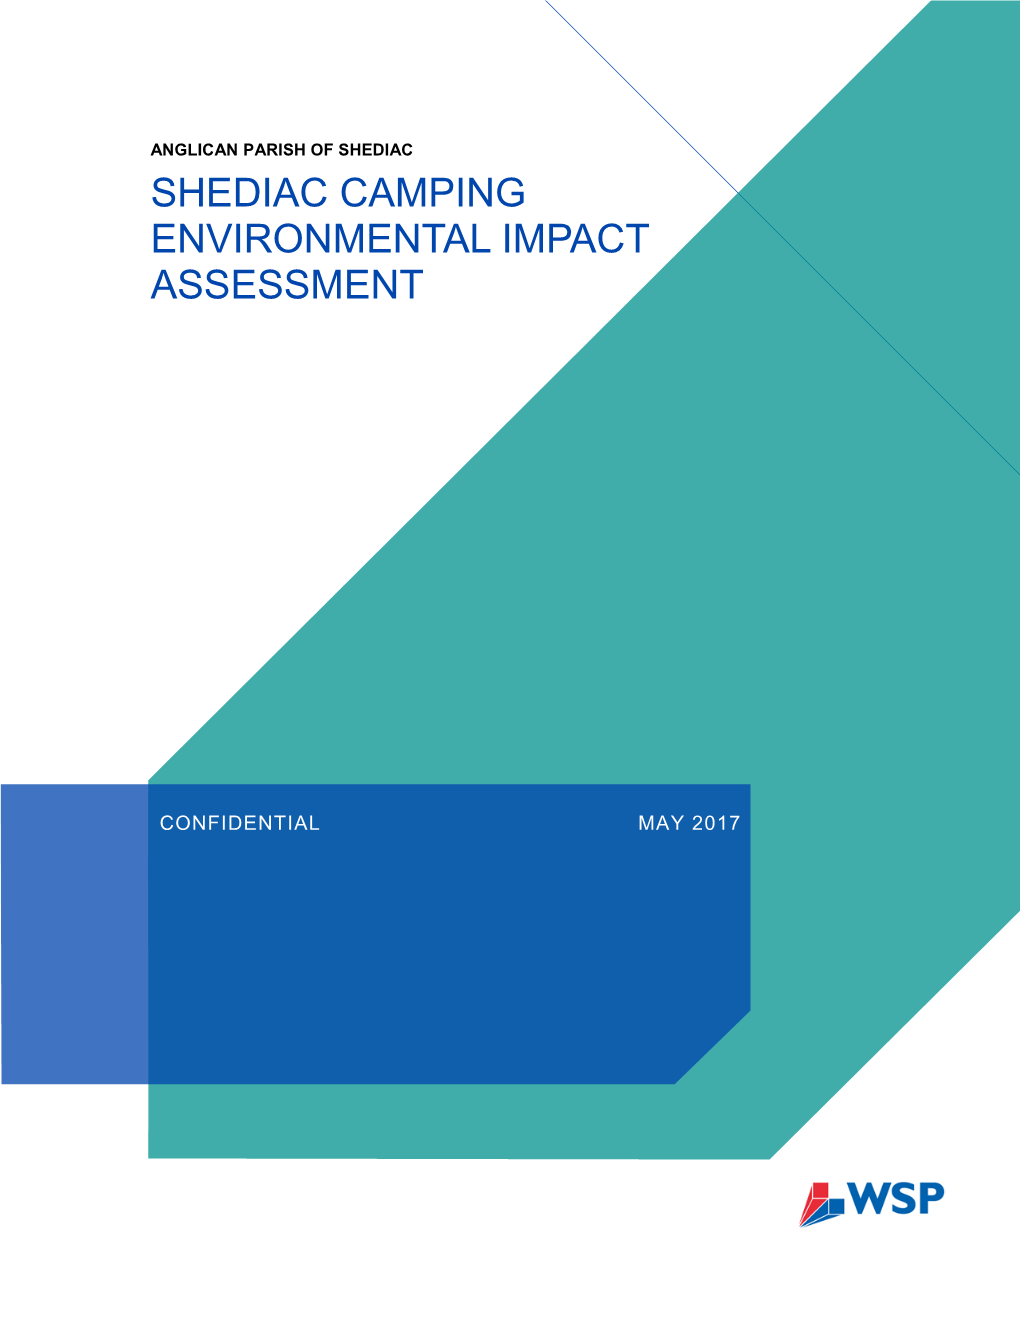 Shediac Camping Environmental Impact Assessment